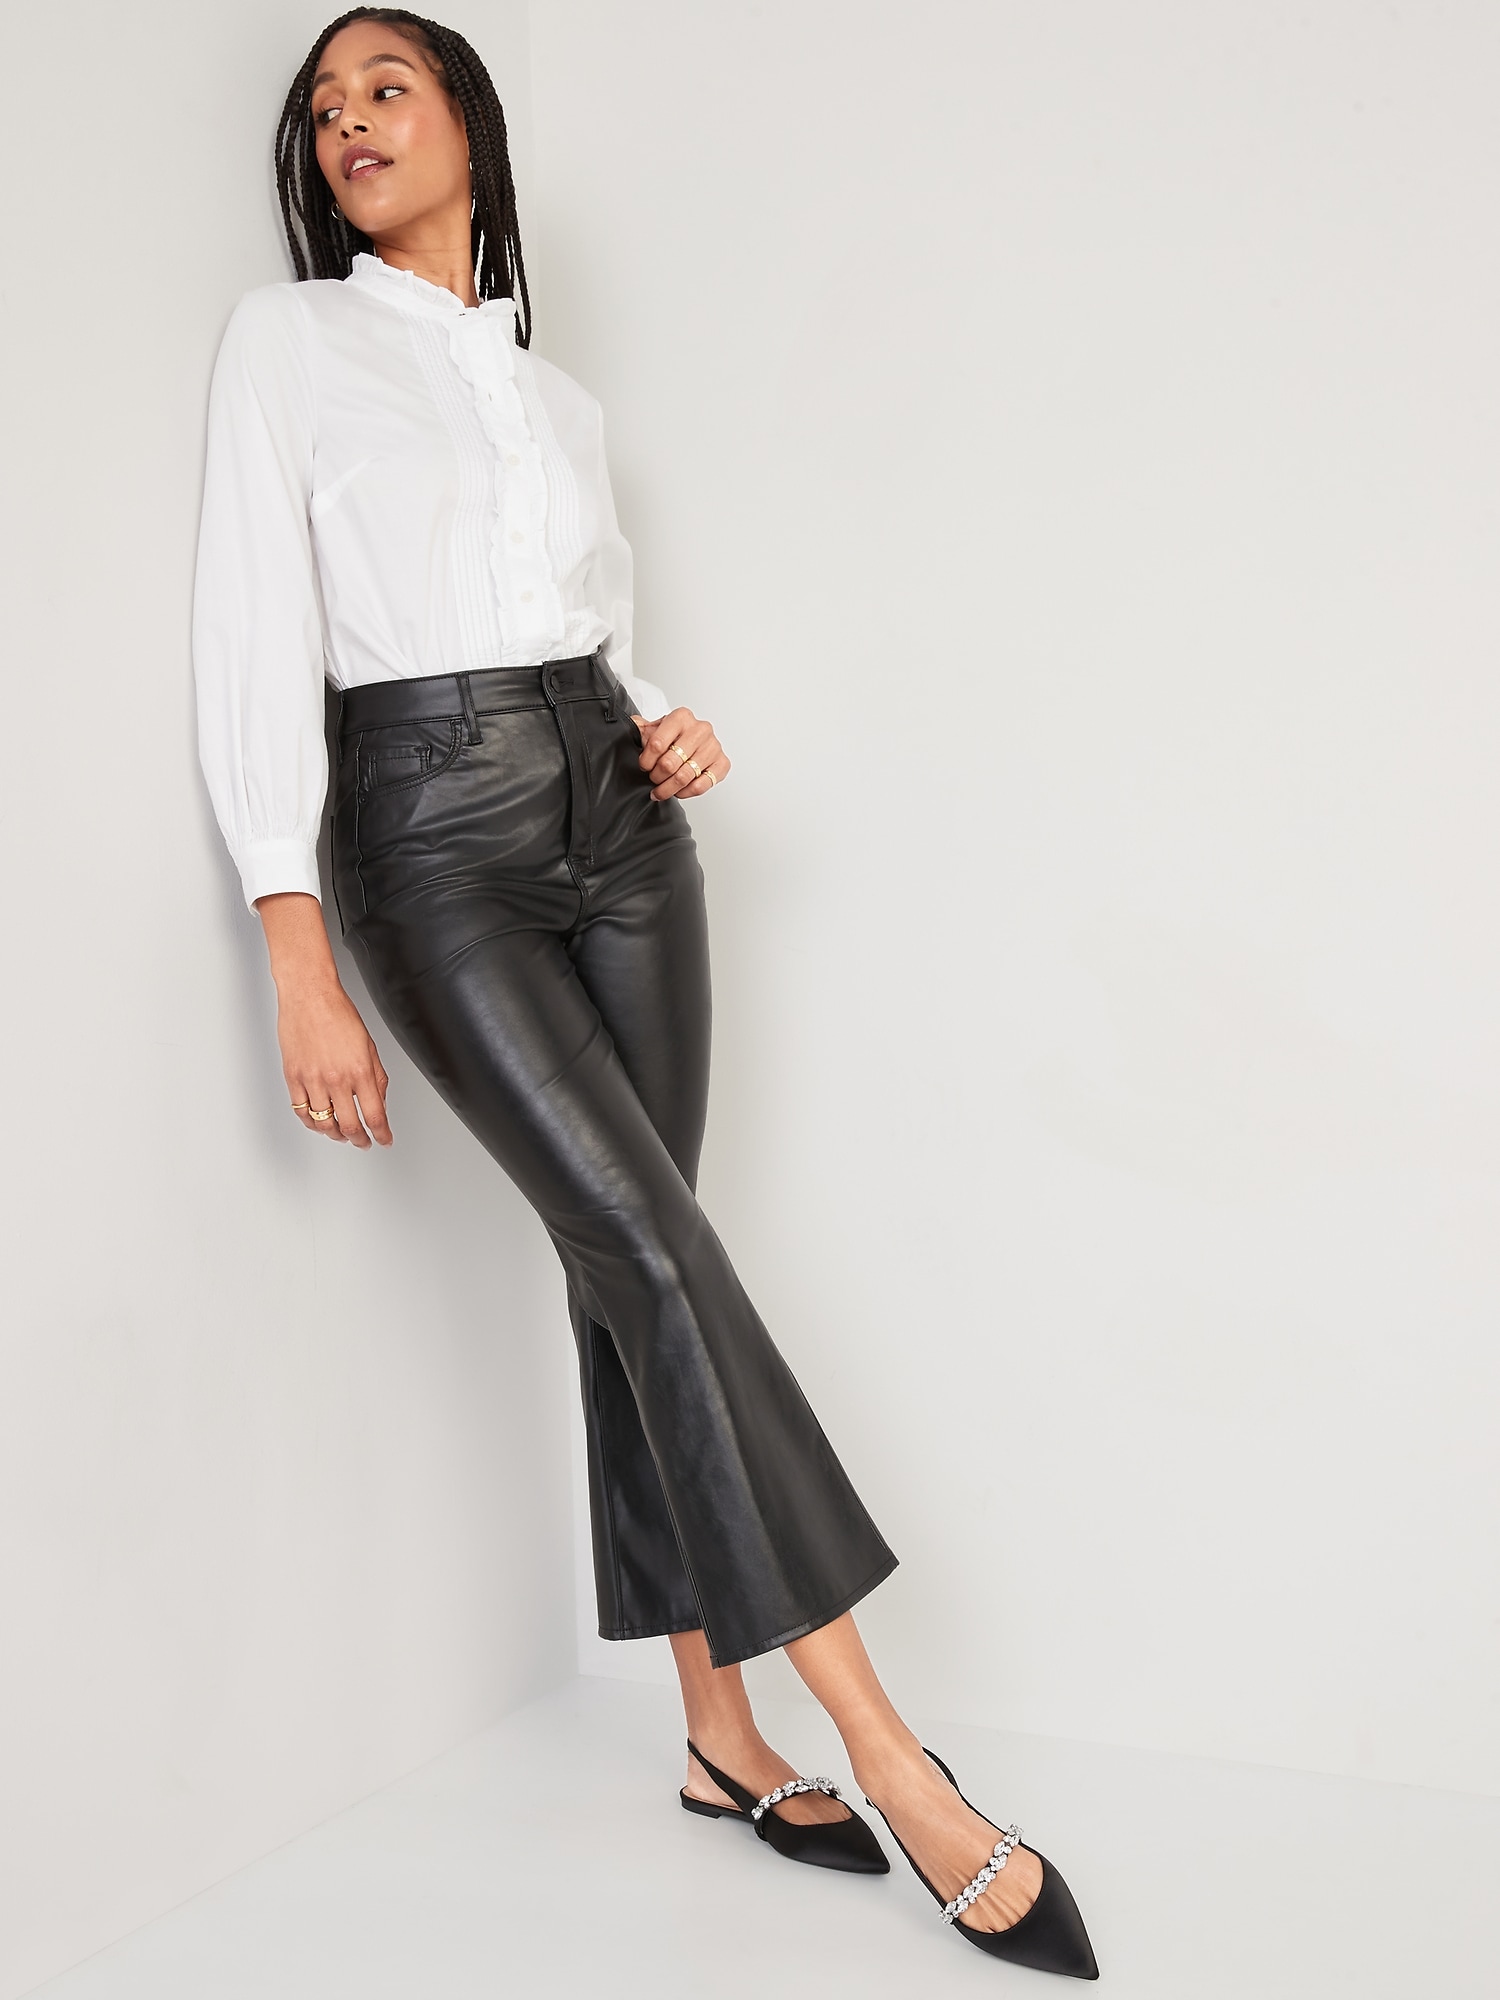 Women's Imitation Leather Pants size 14, Old Navy,Black,Zipper